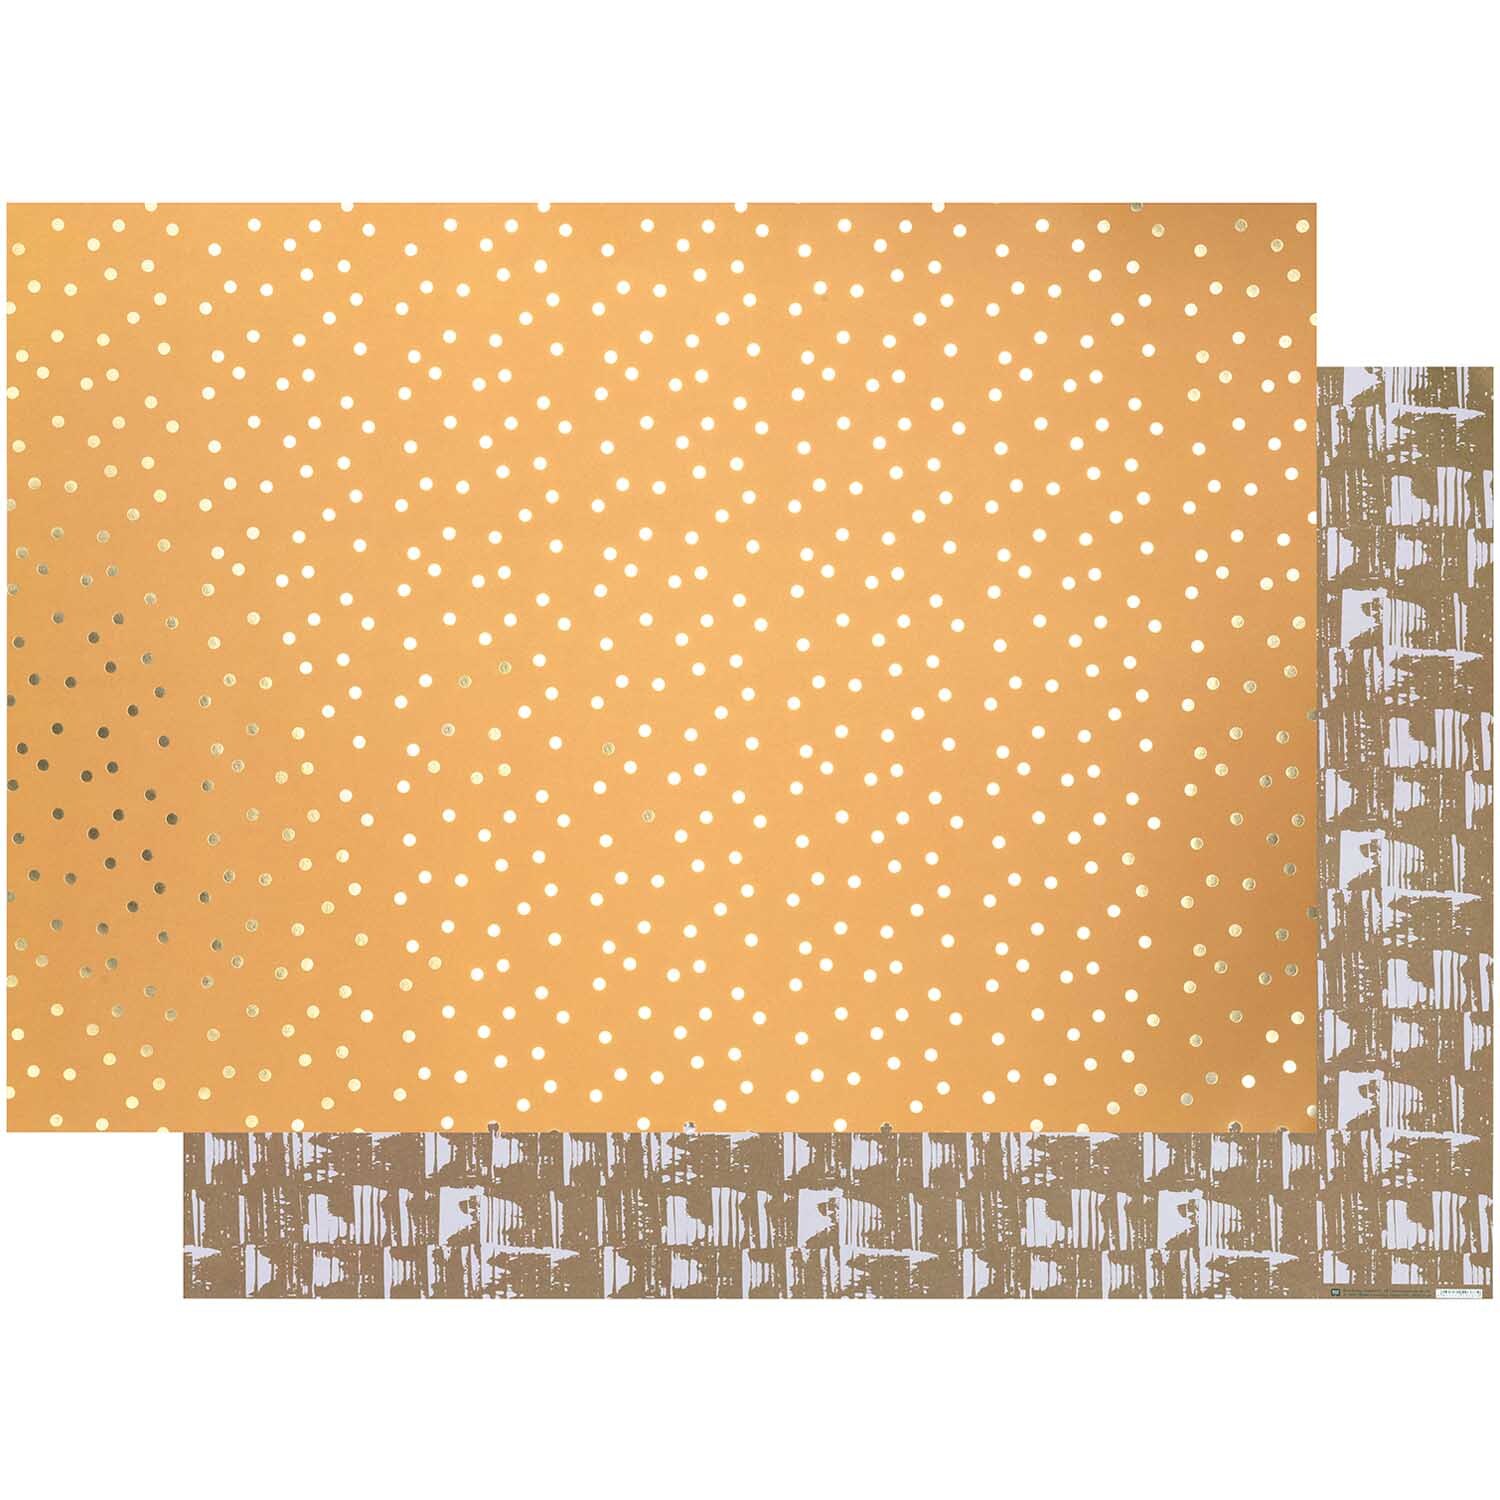 Paper Poetry Motivkarton Punkte senfgelb-gold 50x70cm